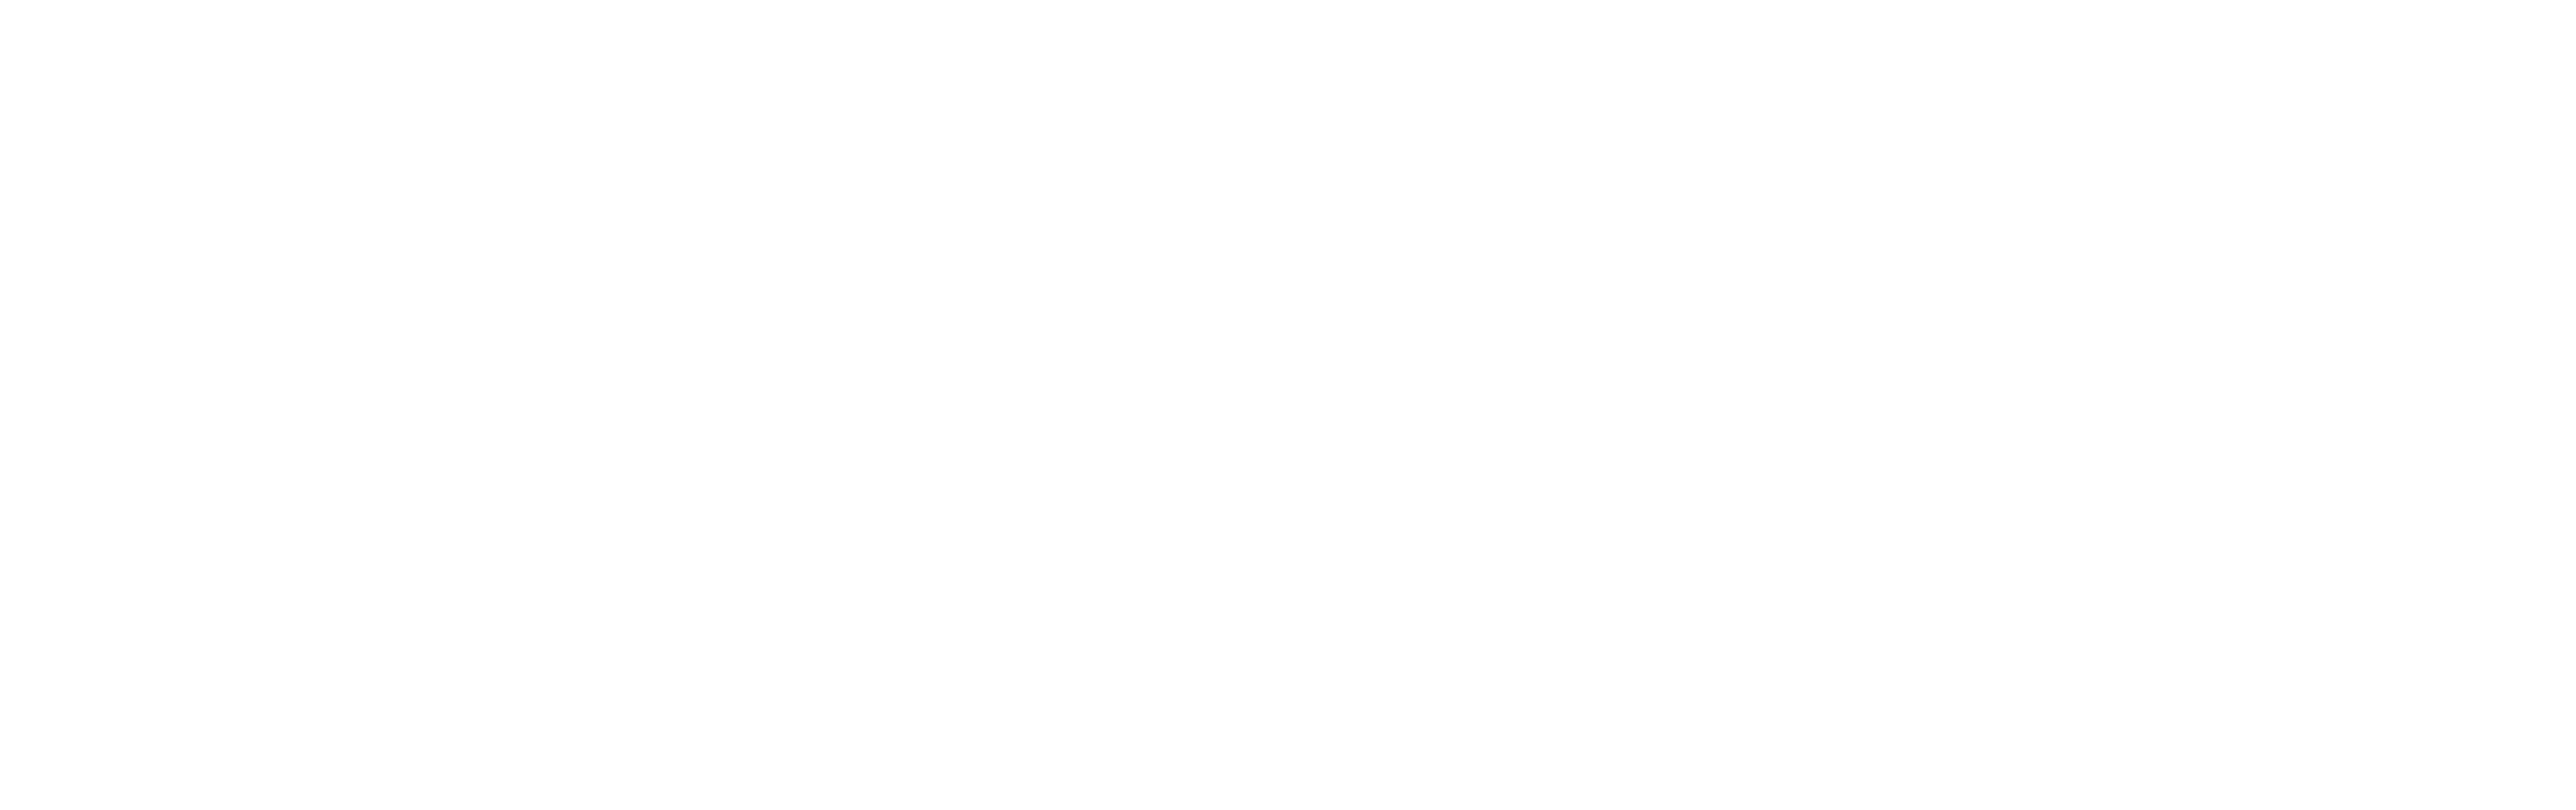 Dassault Systemes (DSS) Logo